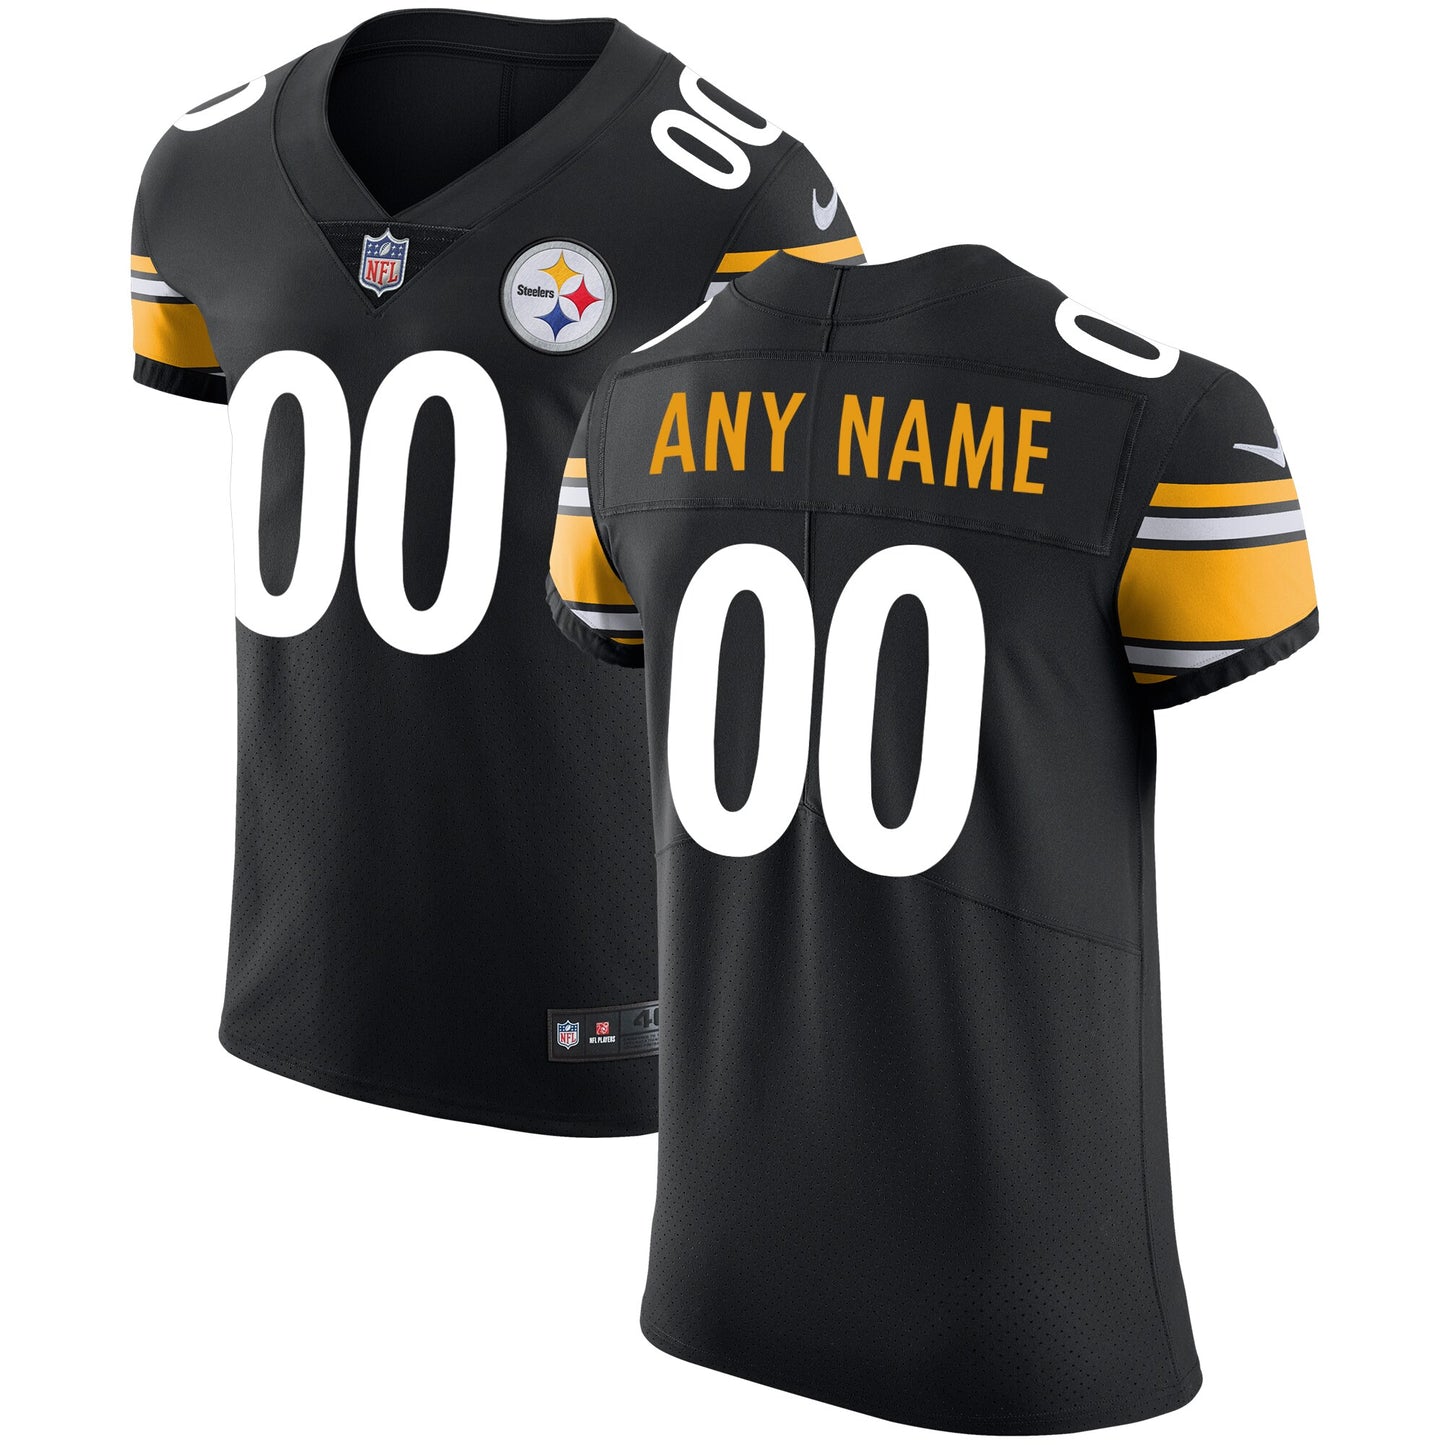 Pittsburgh Steelers Nike Vapor Untouchable Custom Elite Jersey - Black